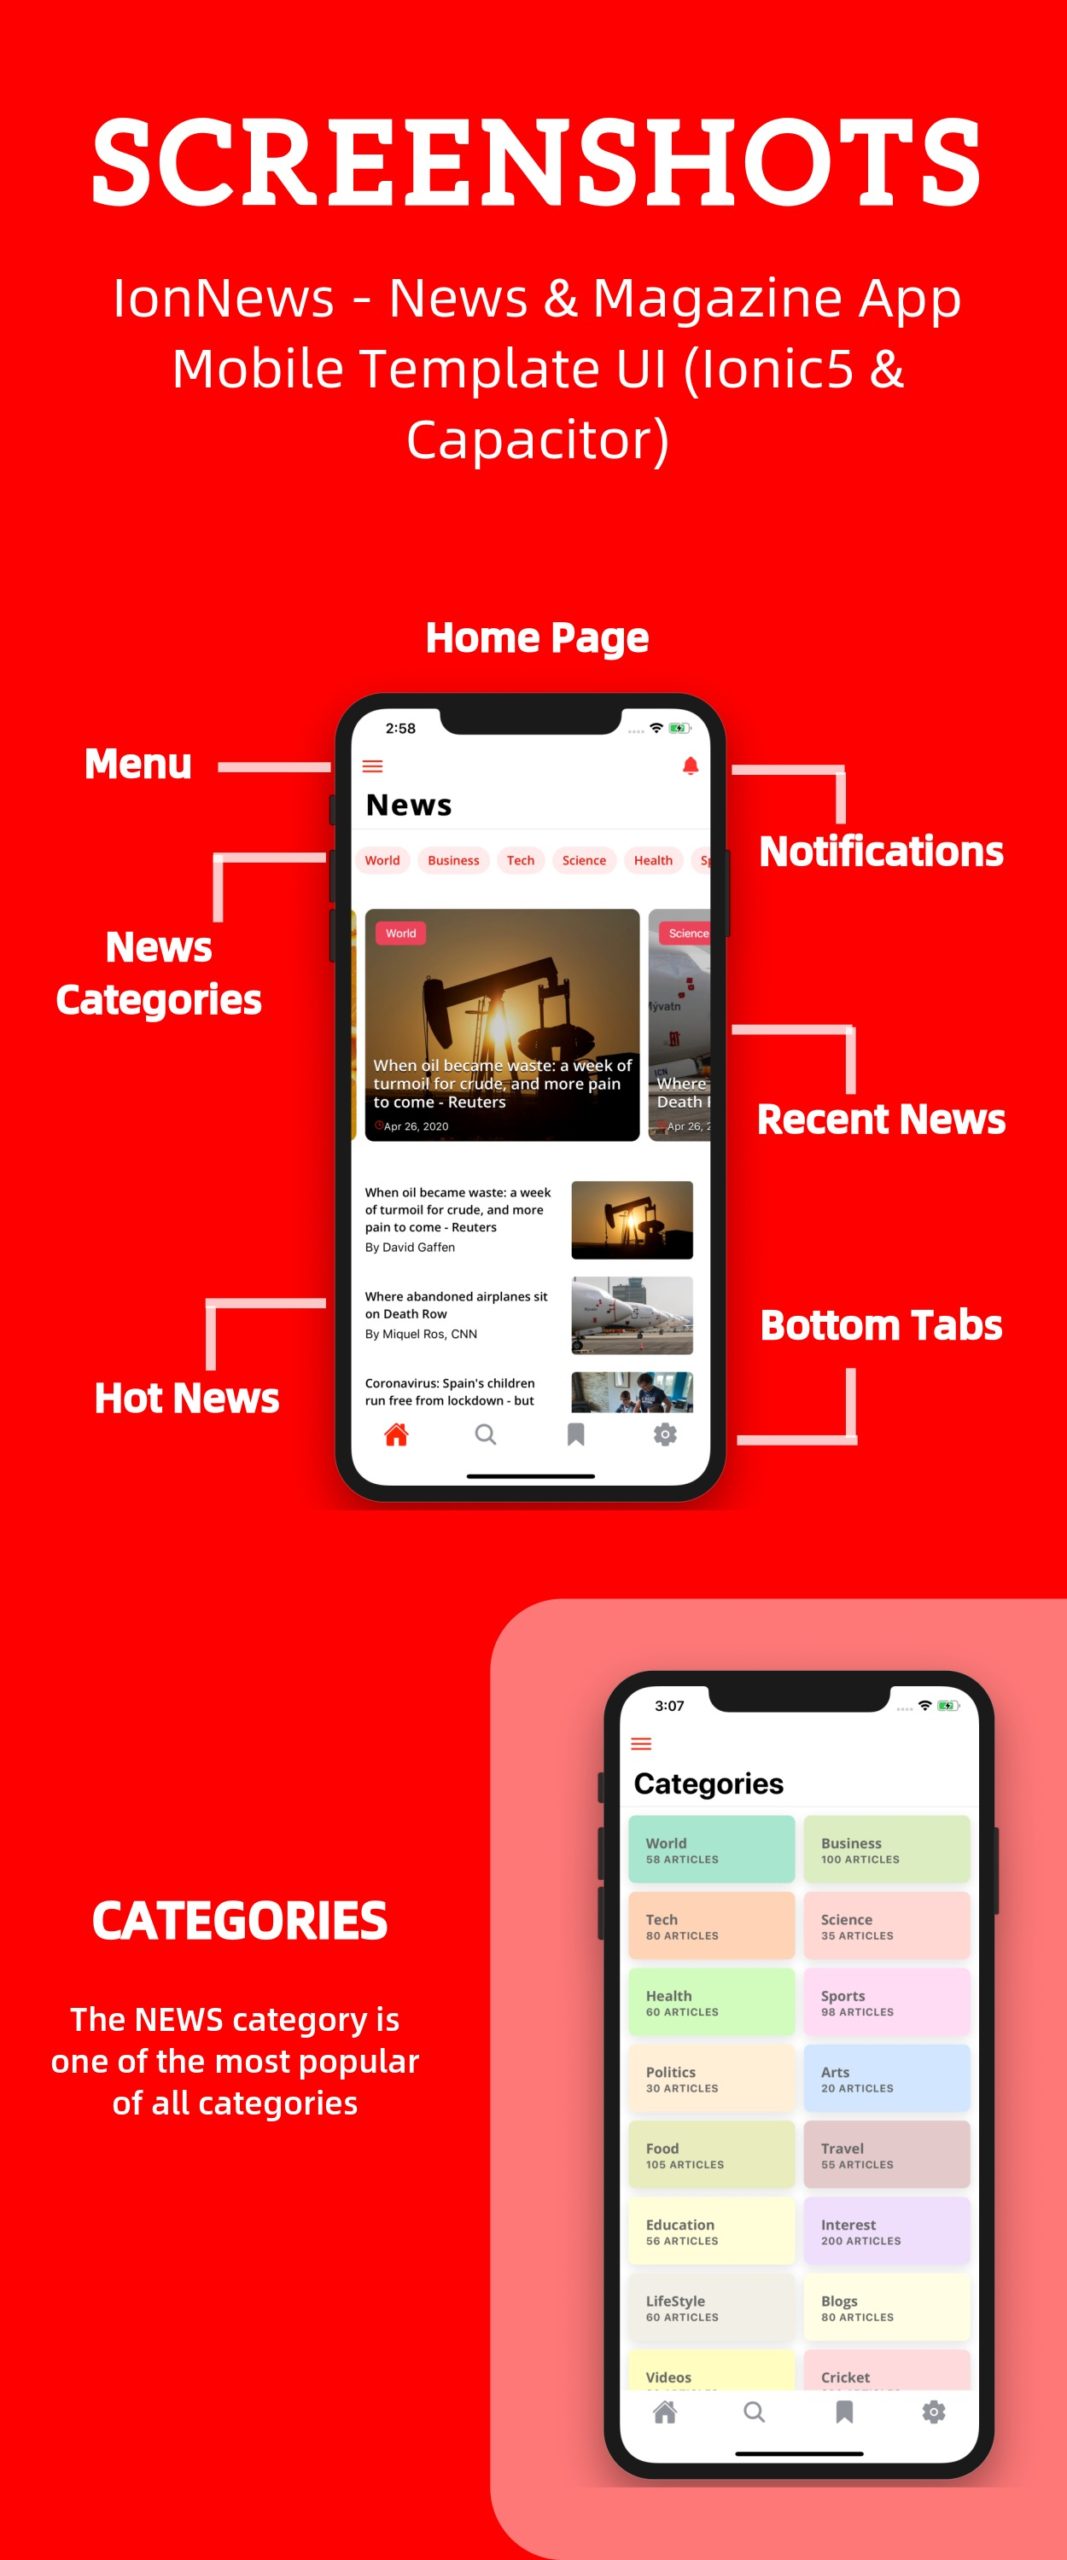 IonNews - News & Magazine App Mobile Template UI (Ionic5 & Capacitor) - 4